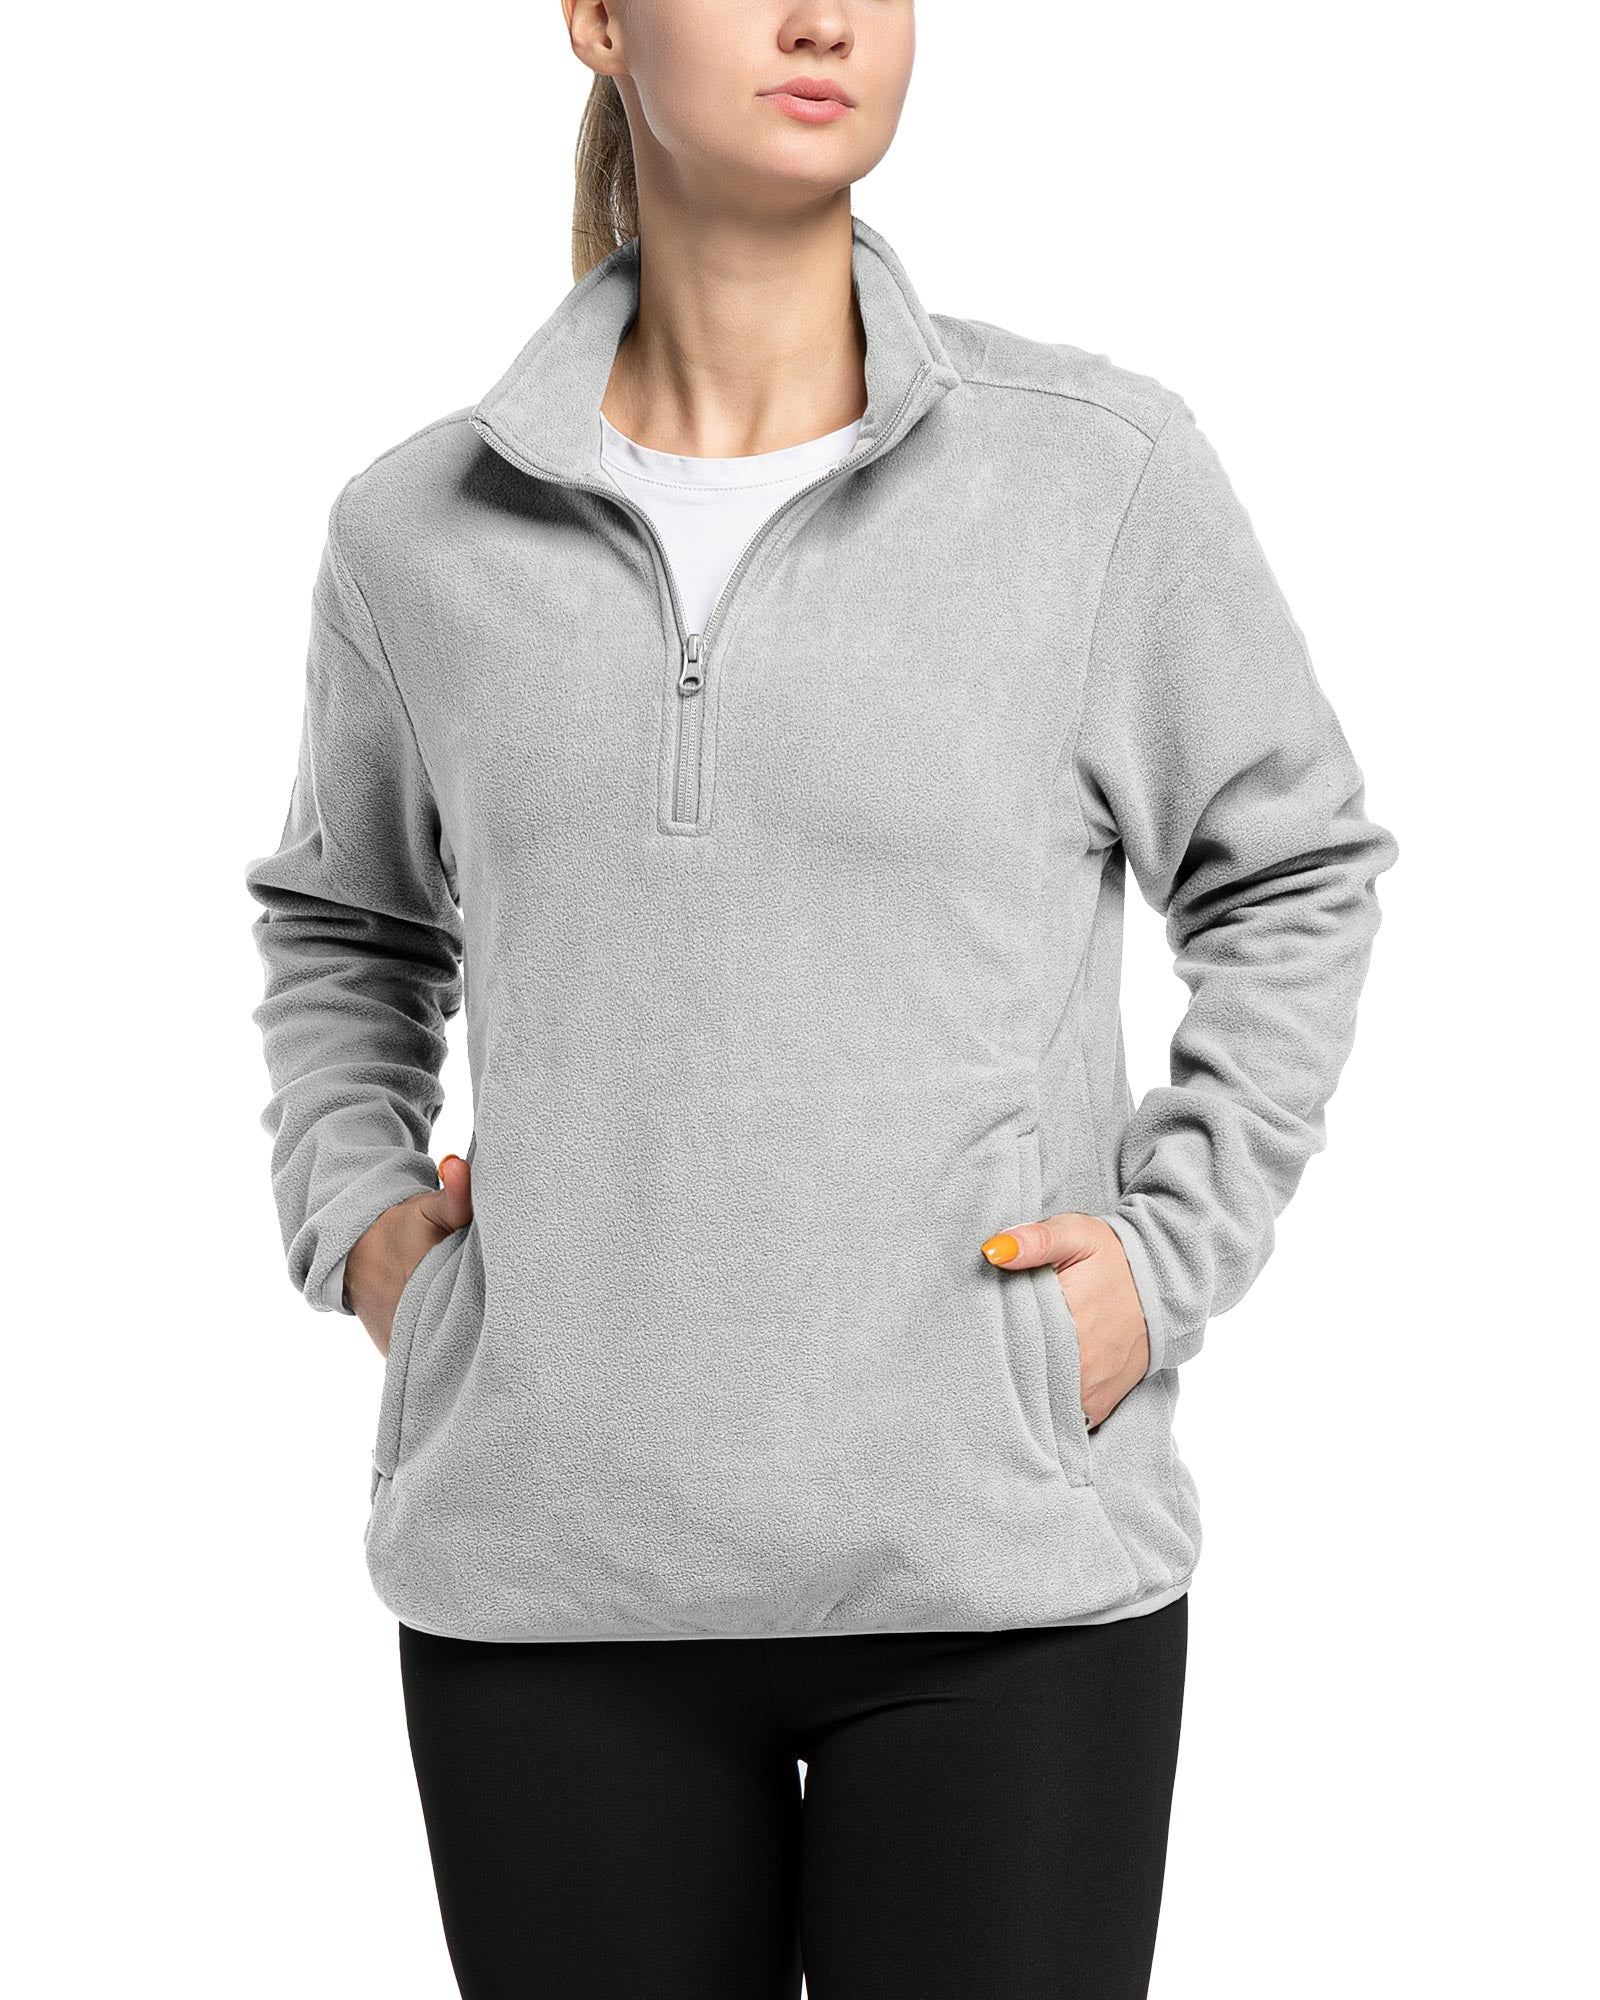 Women's Lightweight Long Sleeve Fleece Pullover Jacket, Quarter Zip To –  33,000ft